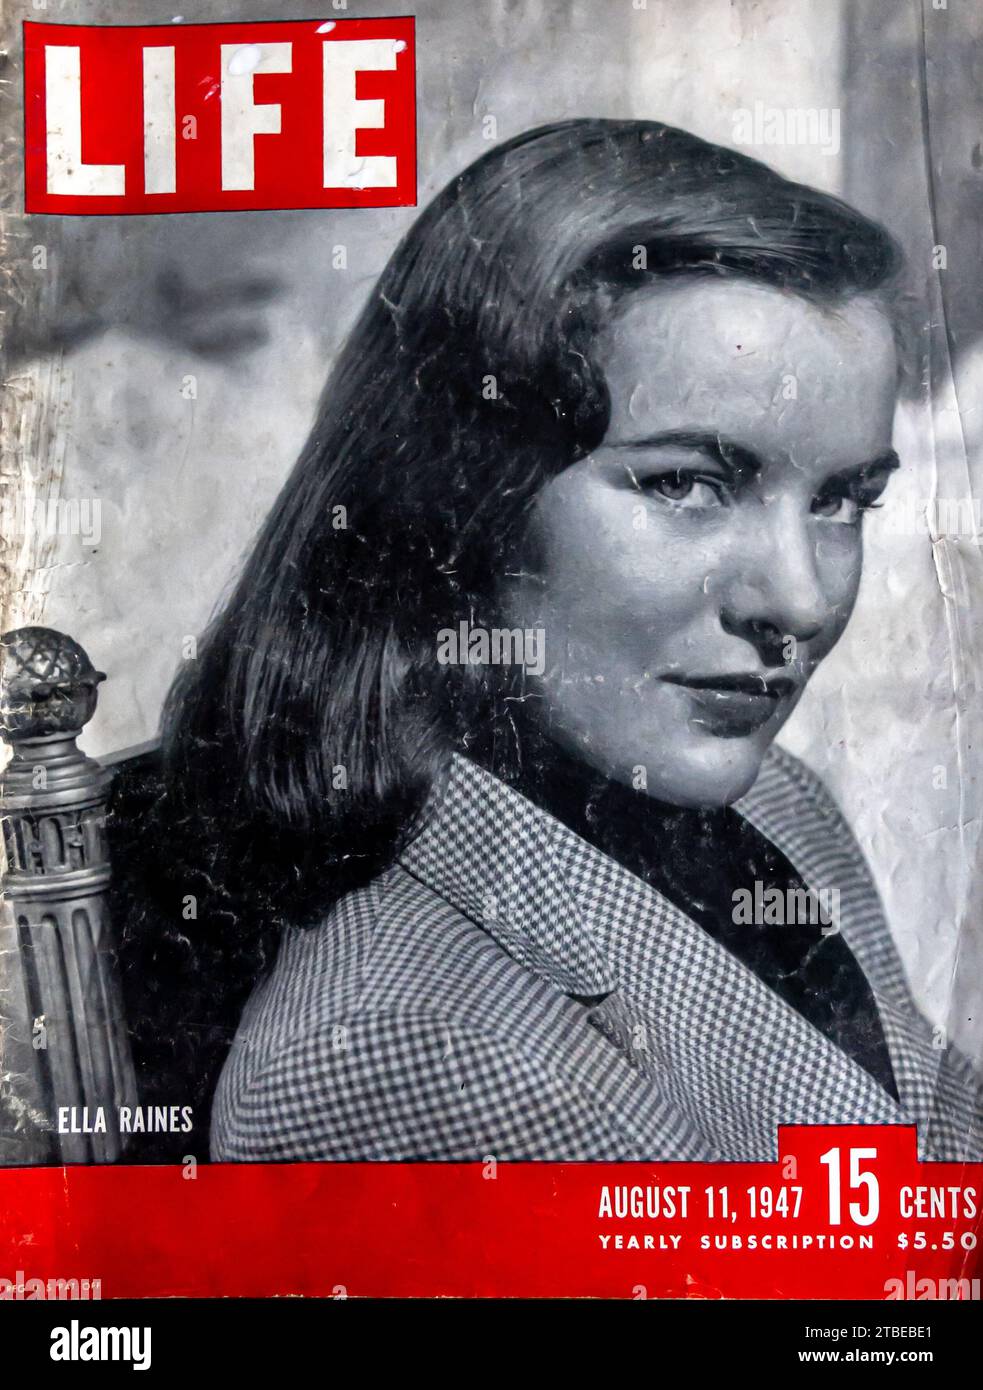 LIFE magazine cover- August 11, 1947 with Ella Raines Stock Photo